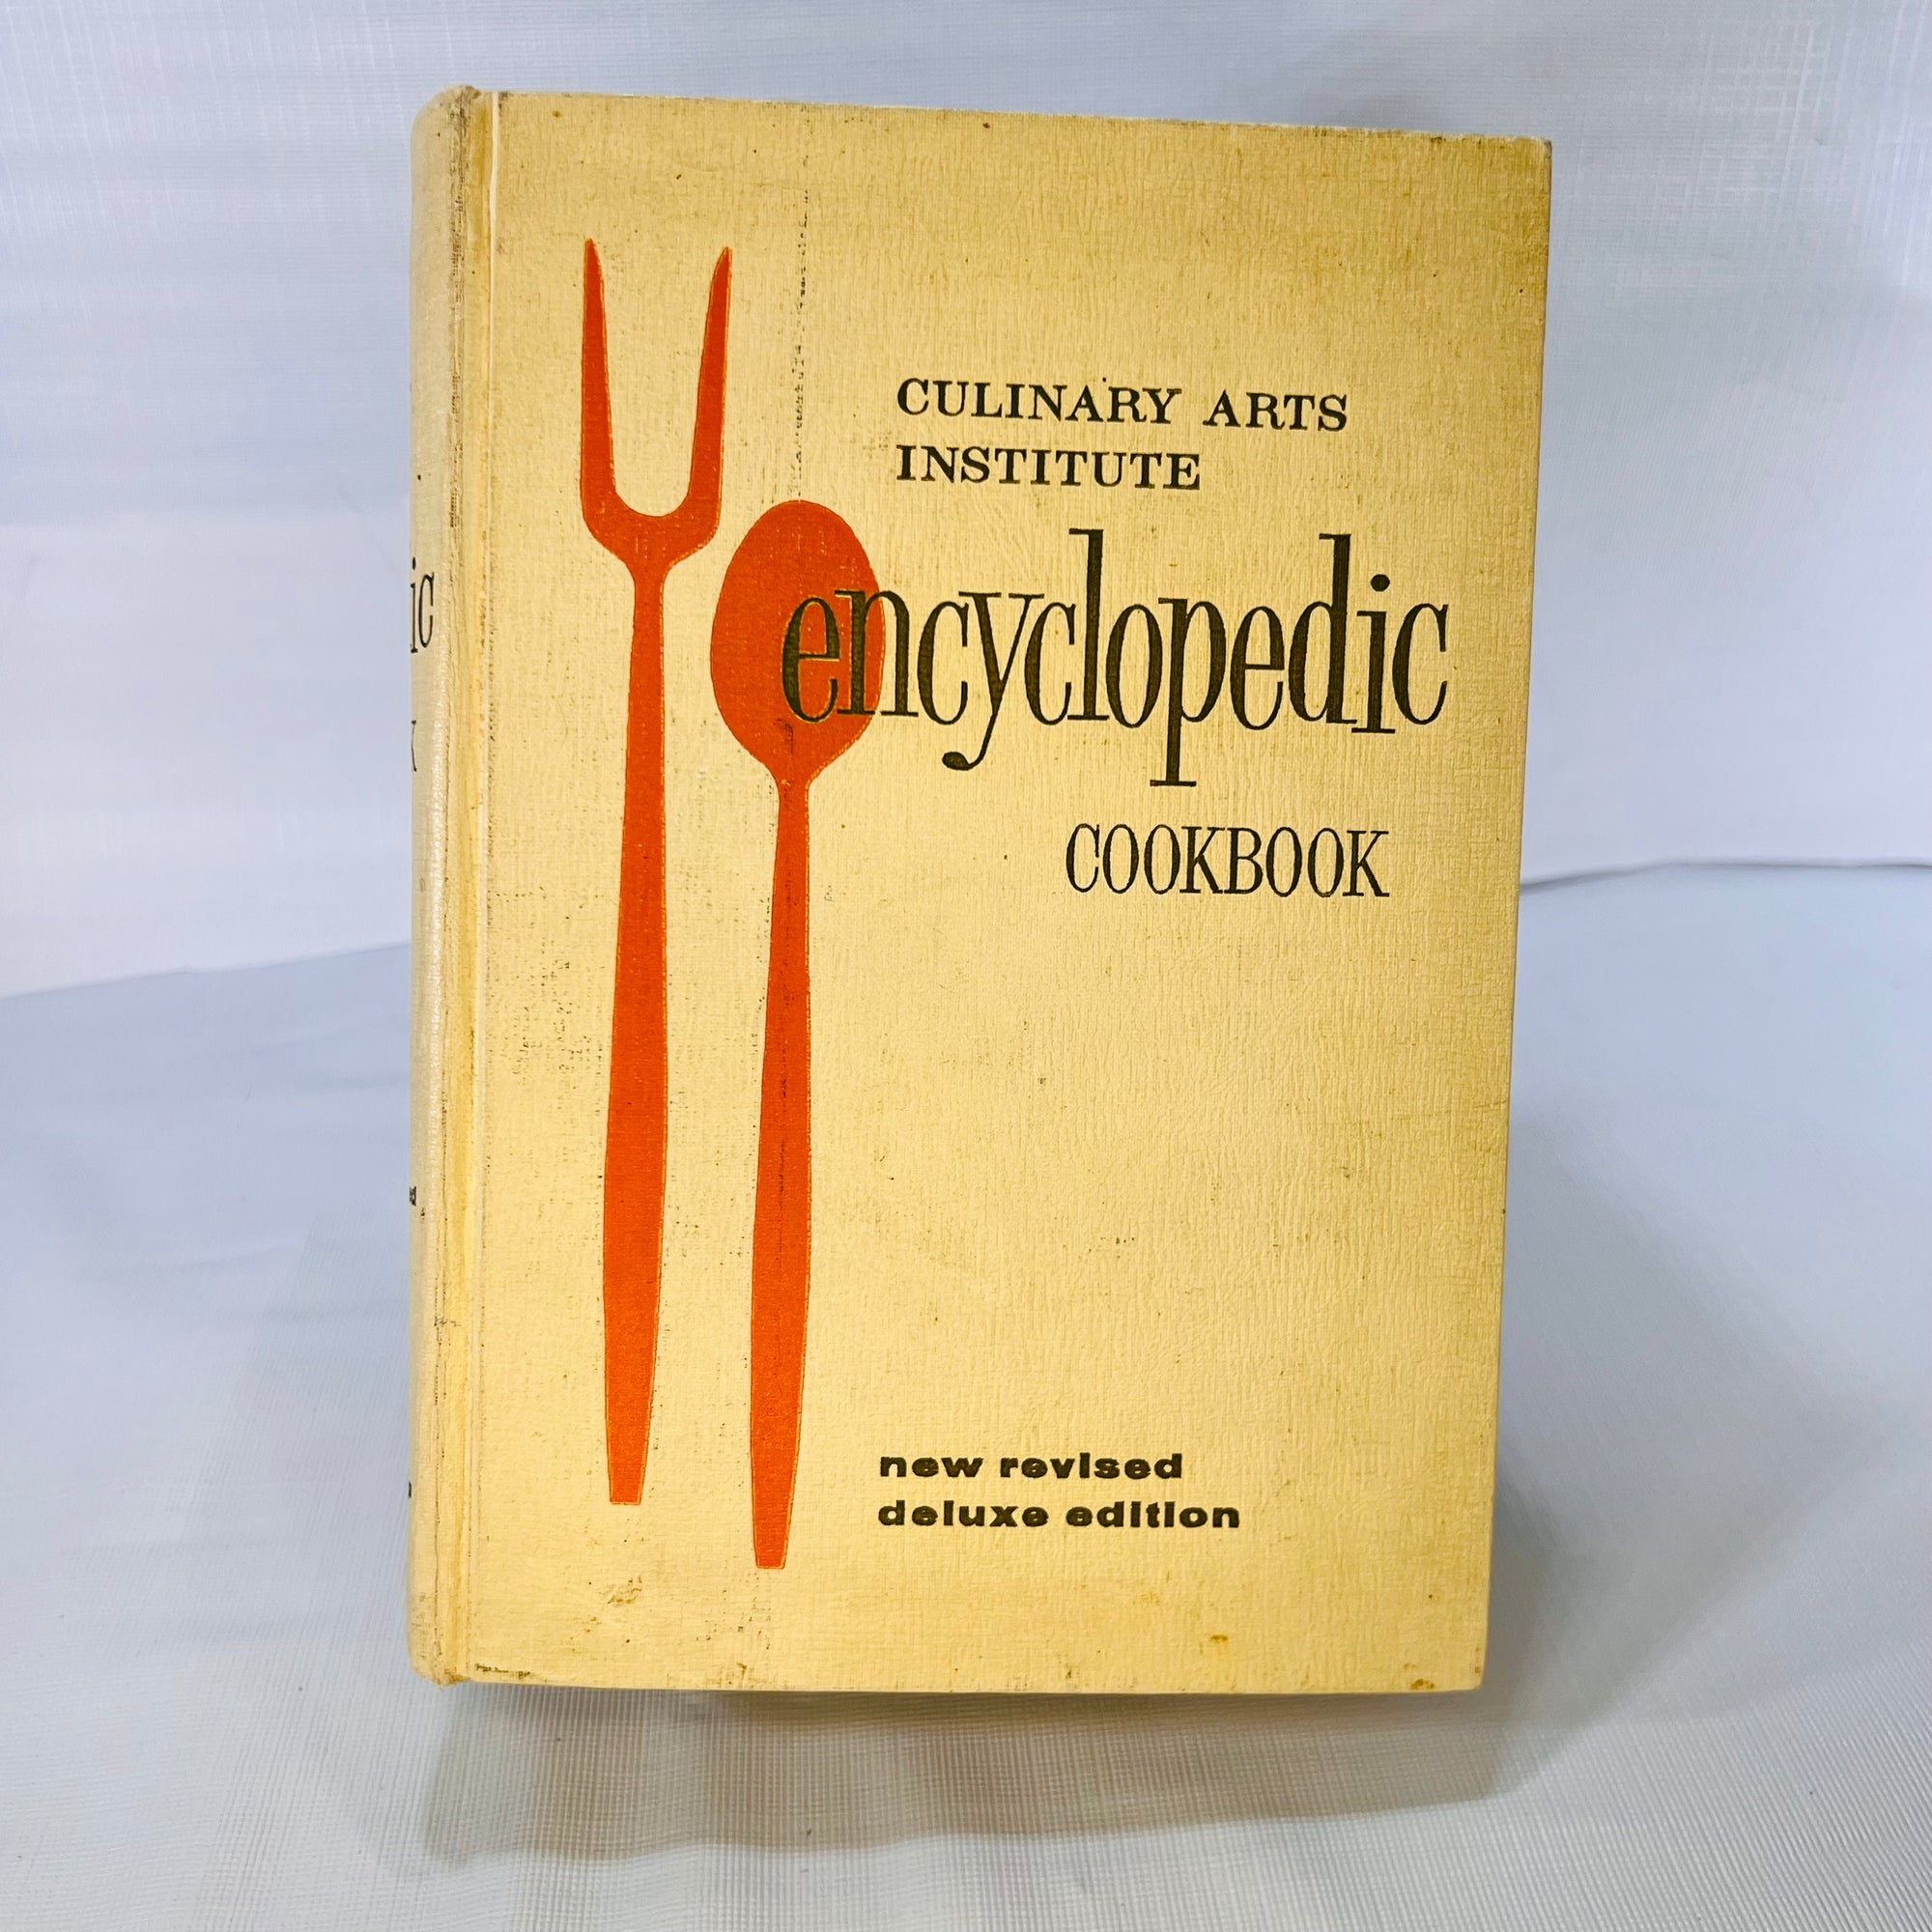 Culinary Arts Institute Encyclopedic Cookbook edited by Ruth Berolzheimer 1950 Culinary Arts Institute